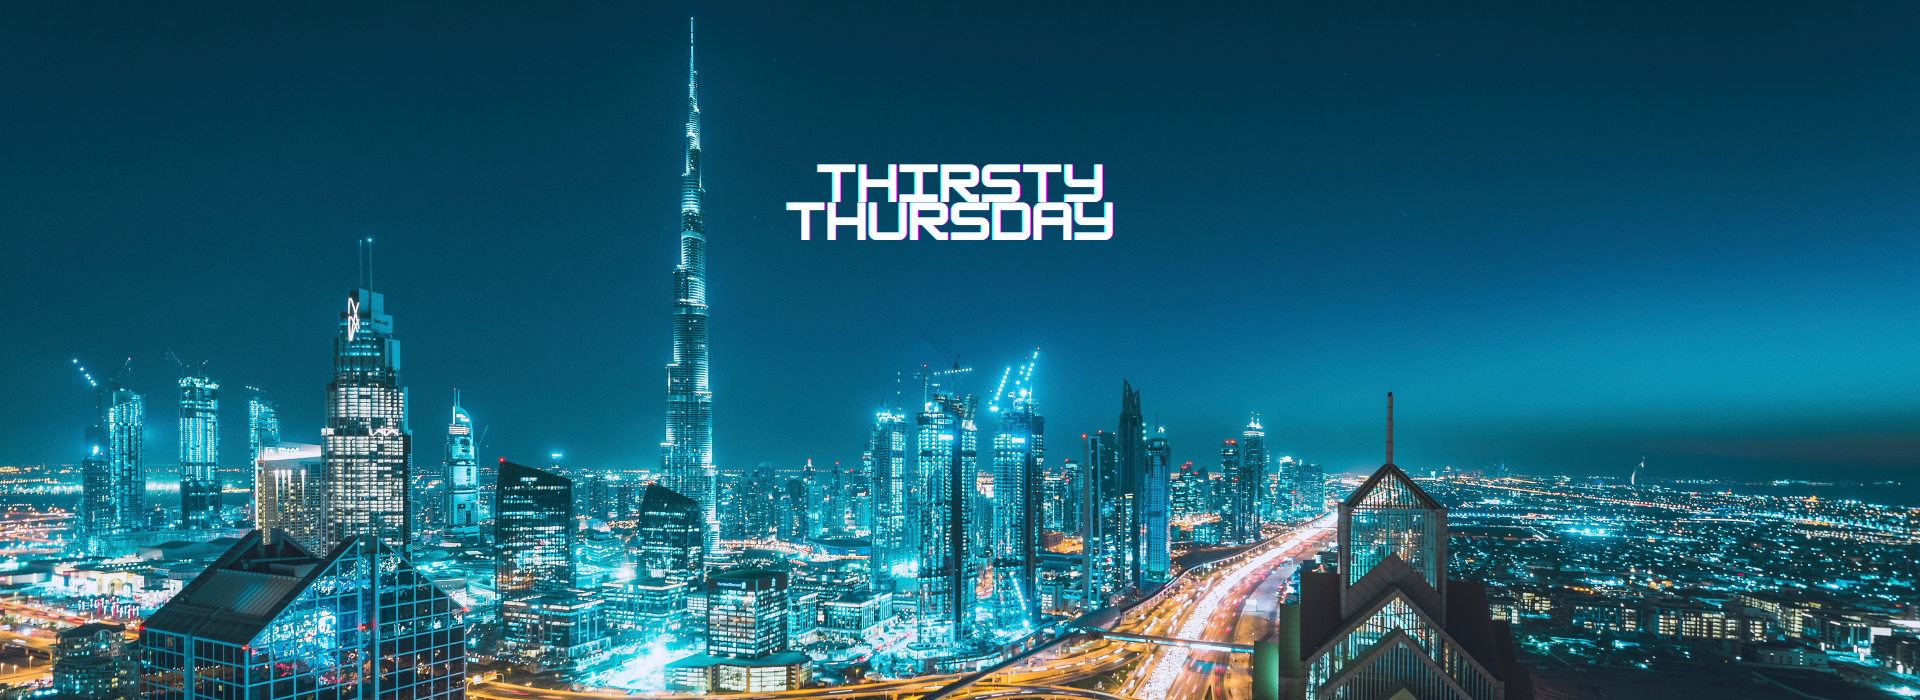 Thirsty-Thursday-website-banner